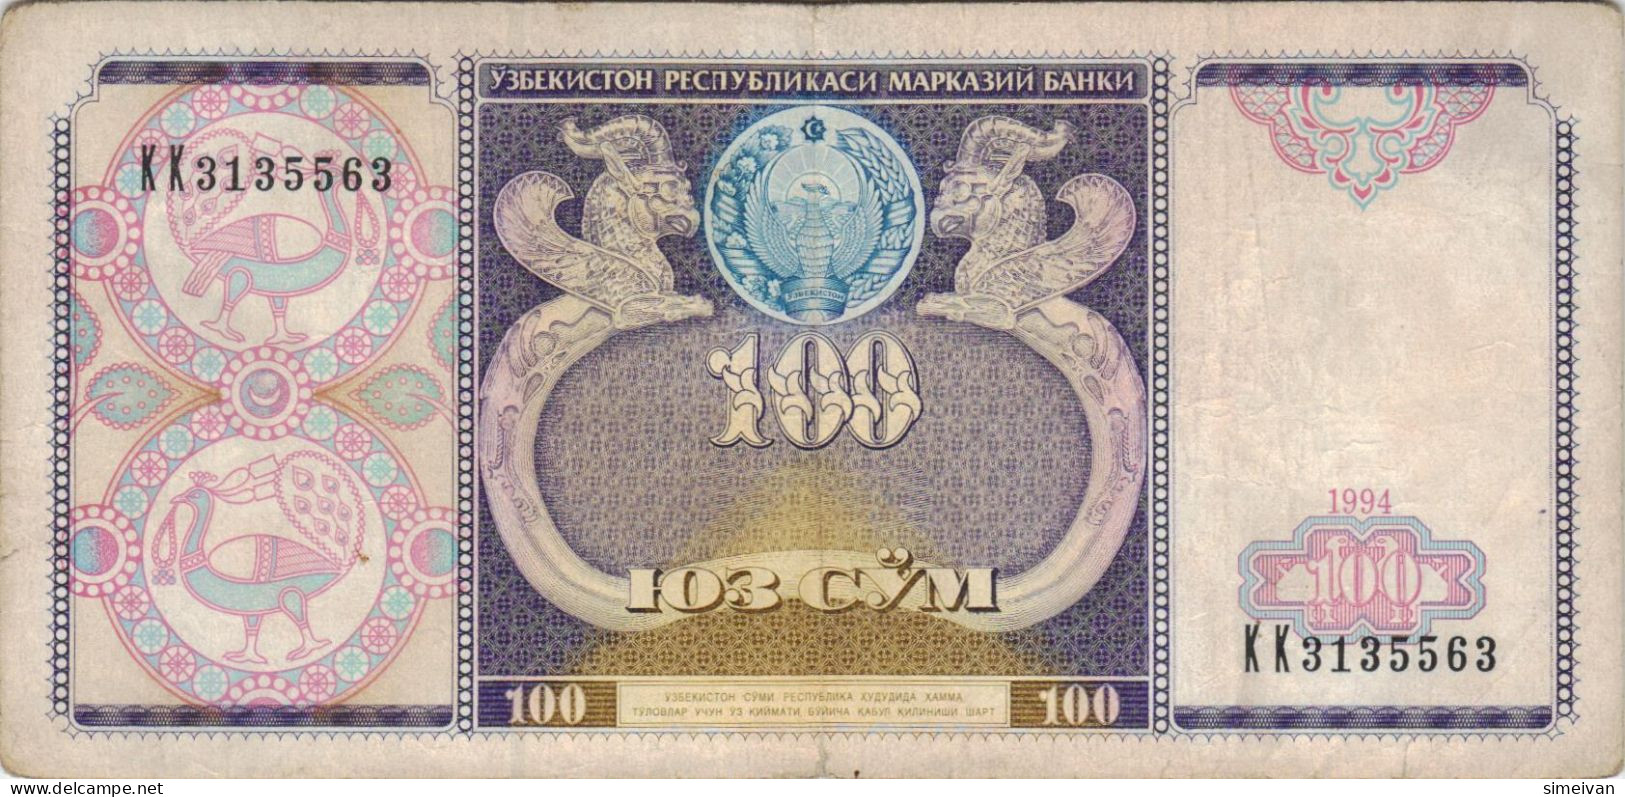 Uzbekistan 100 Sum 1994 P-79a Banknote Asia Currency Ouzbékistan Usbekistan #5336 - Usbekistan